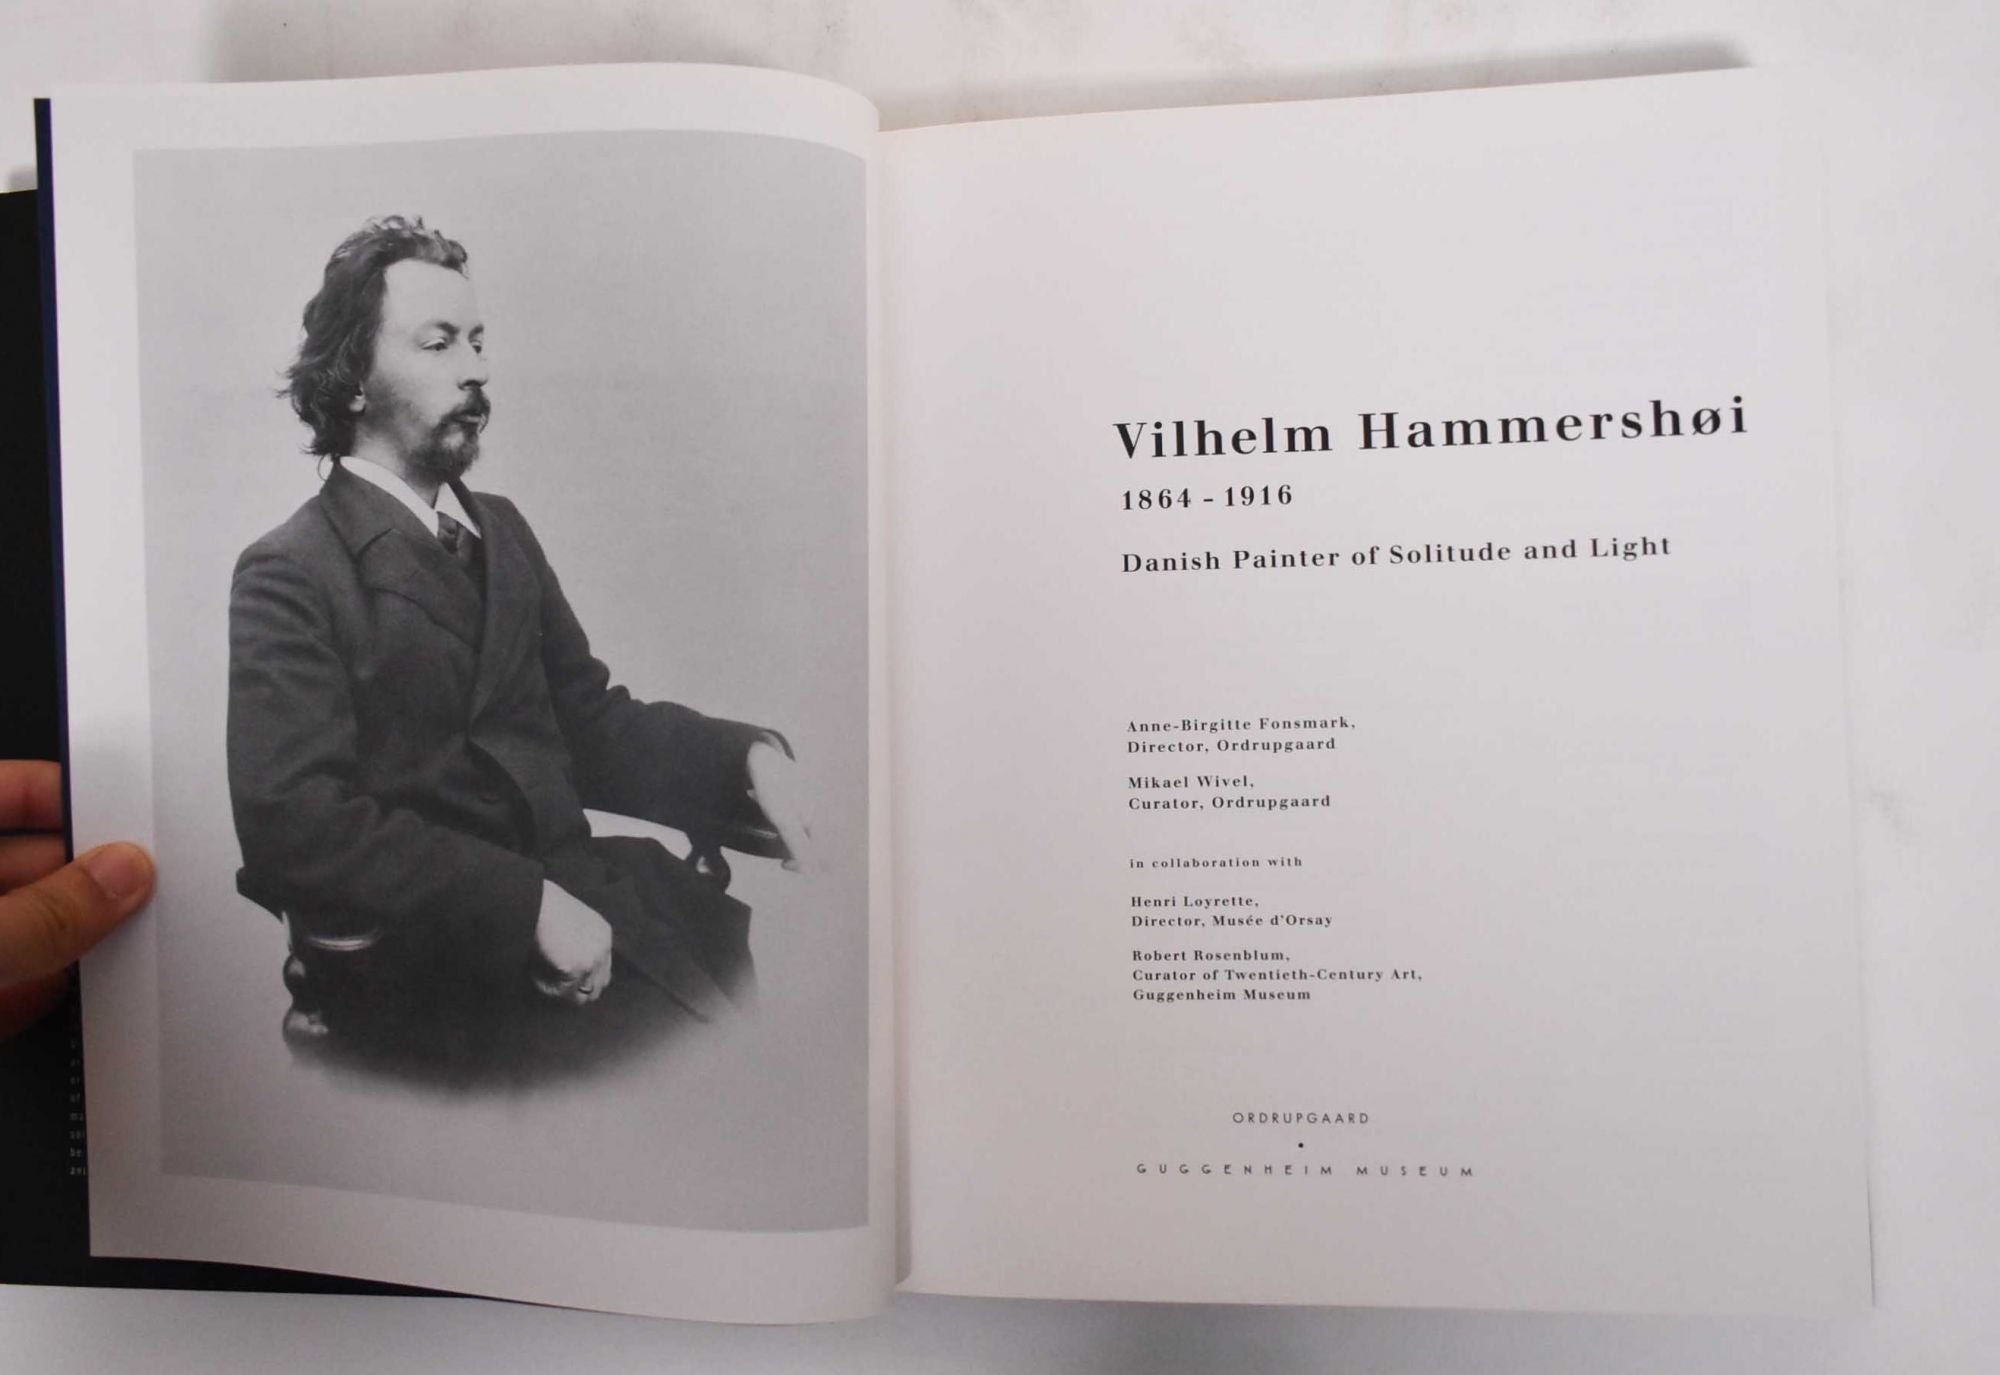 Vilhelm Hammershoi, 1864-1916: Danish Painter of Solitude and Light by  Vilhelm Hammershoi, Anne-Birgitte Fonsmark, Mikael Wivel, Henri Loyrette on  